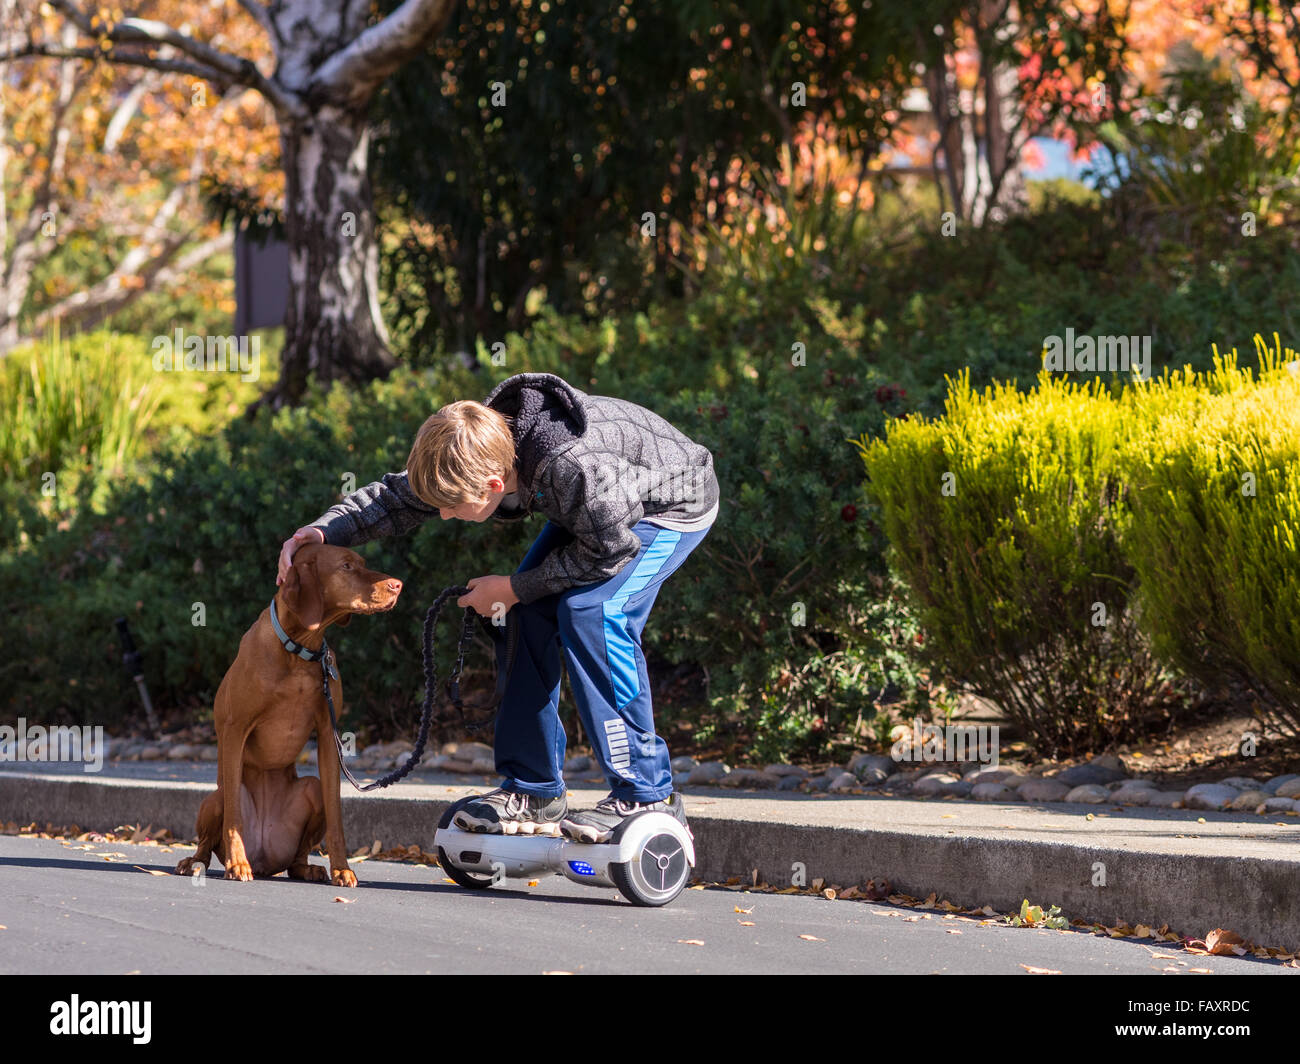 REDDING, CA, USA - NOVEMBER 24, 2015: Teenage boy walks dog using self-balancing two-wheeled scooter, also called a hoverboard. Stock Photo